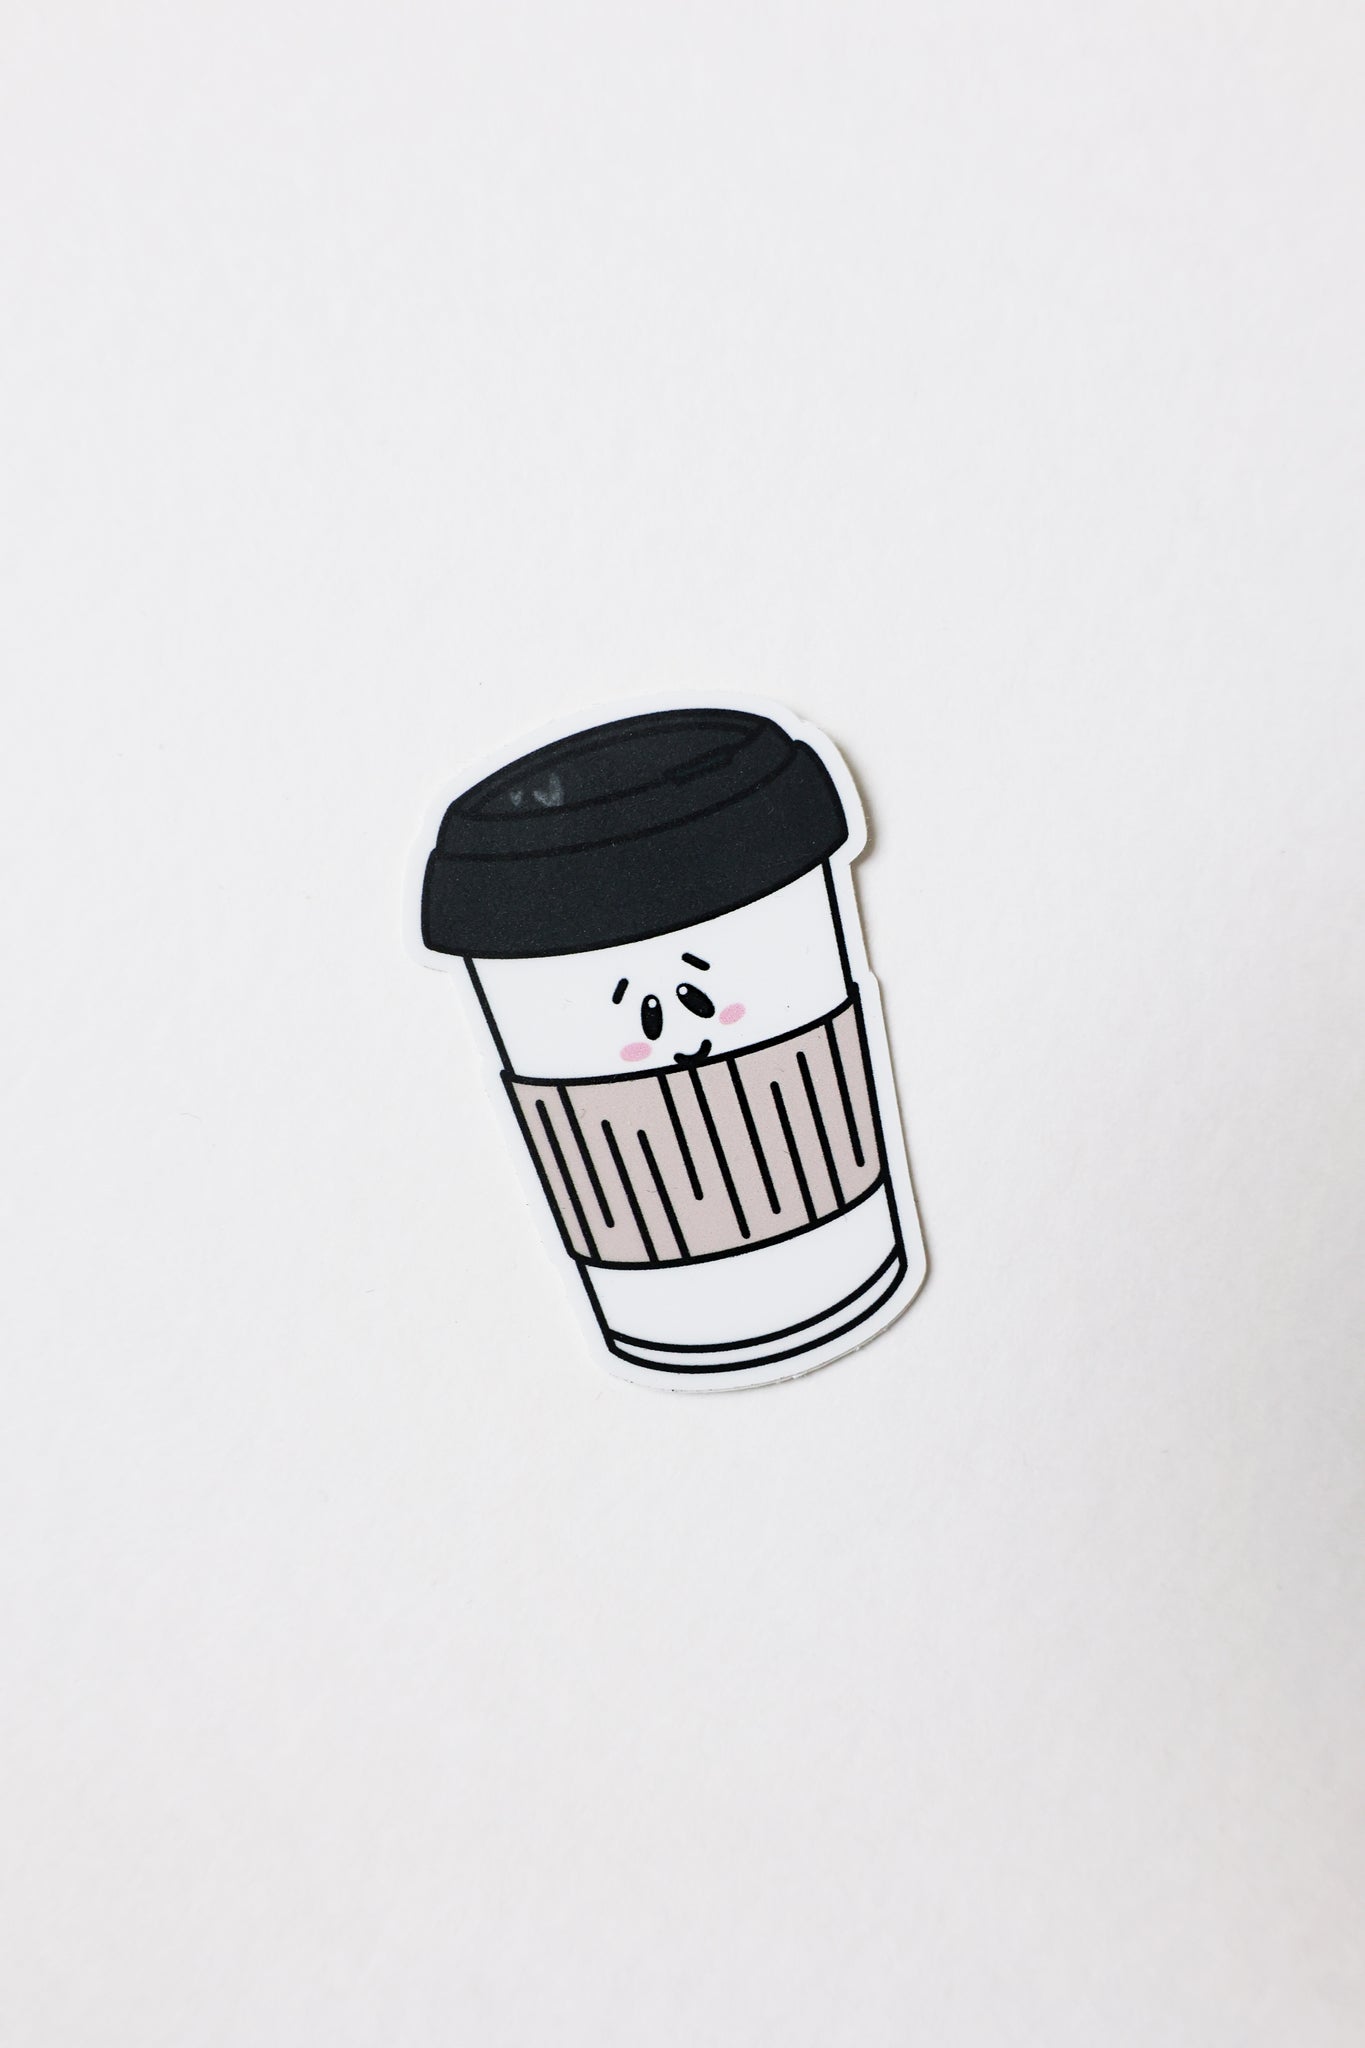 VINYL STICKER - COFFEE CUP